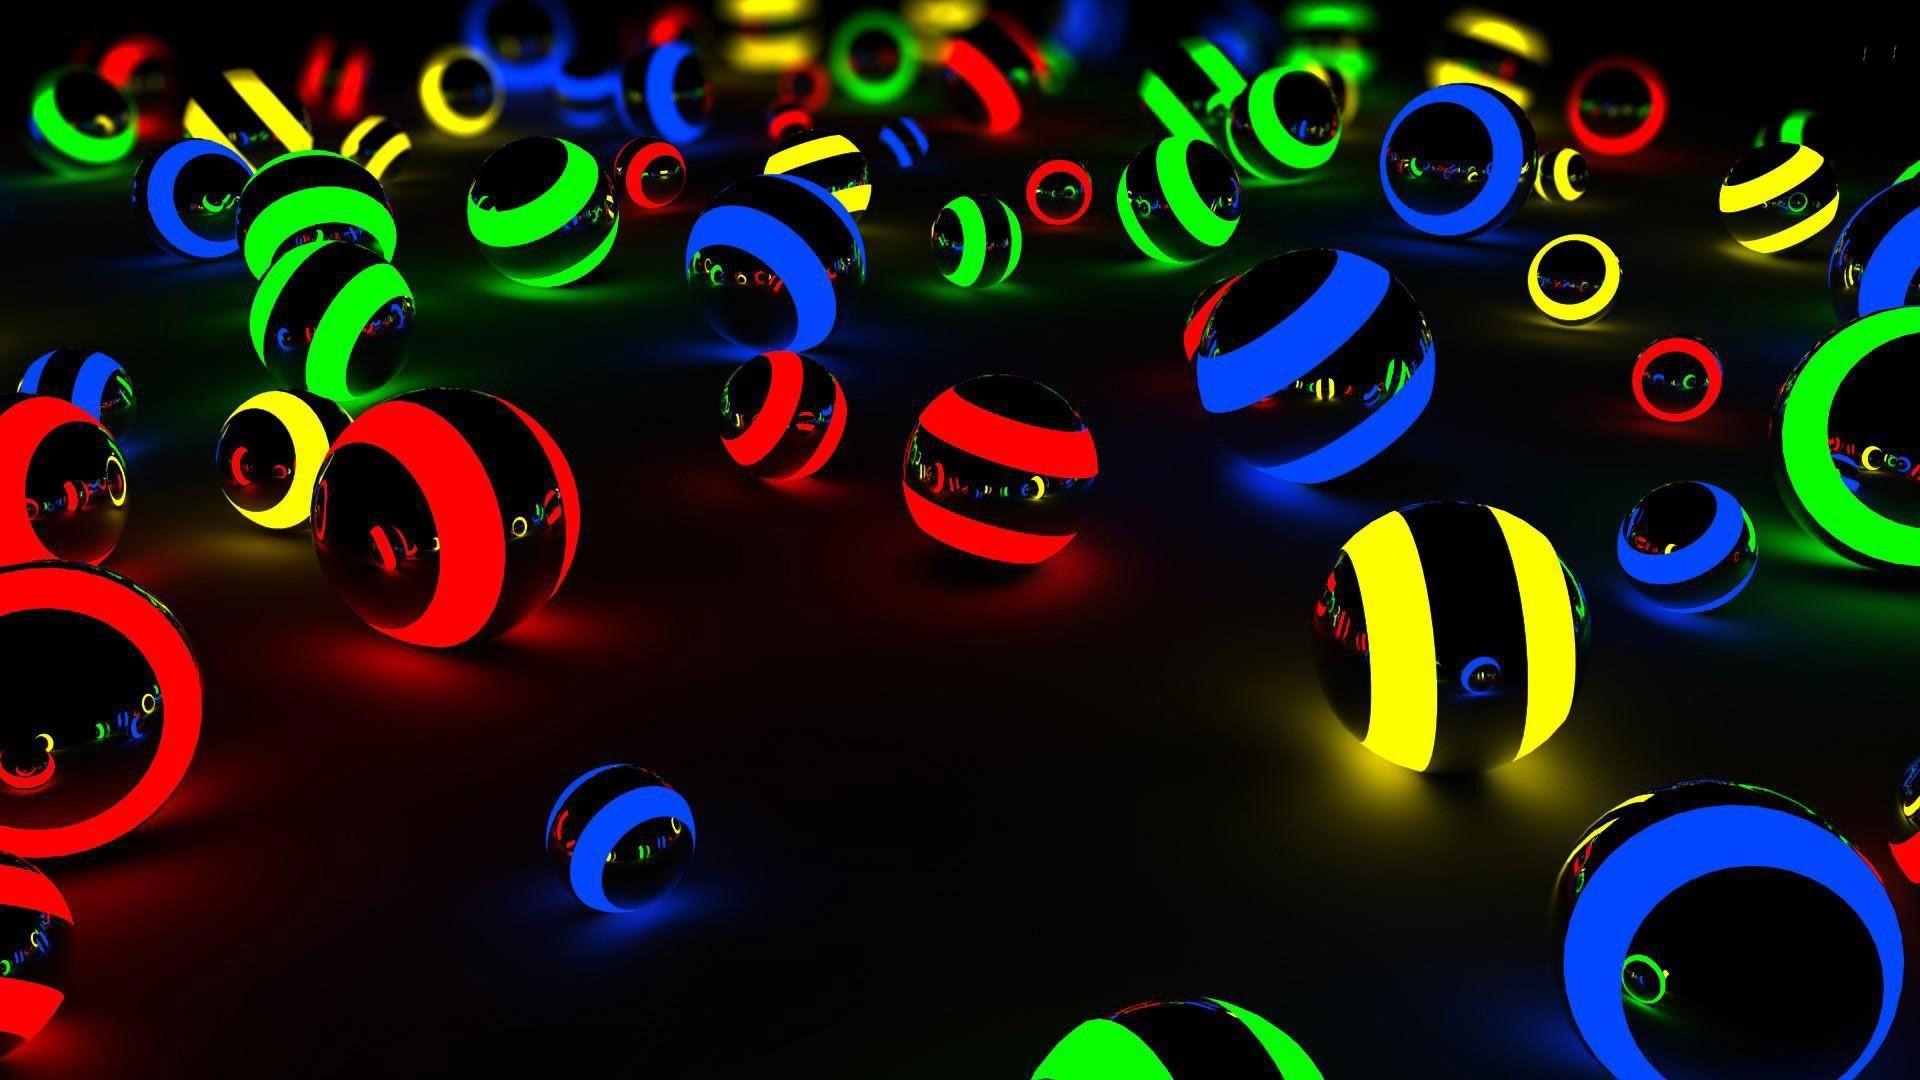 3D Balls Neon Wallpaper. Free Download GameFree Download Game